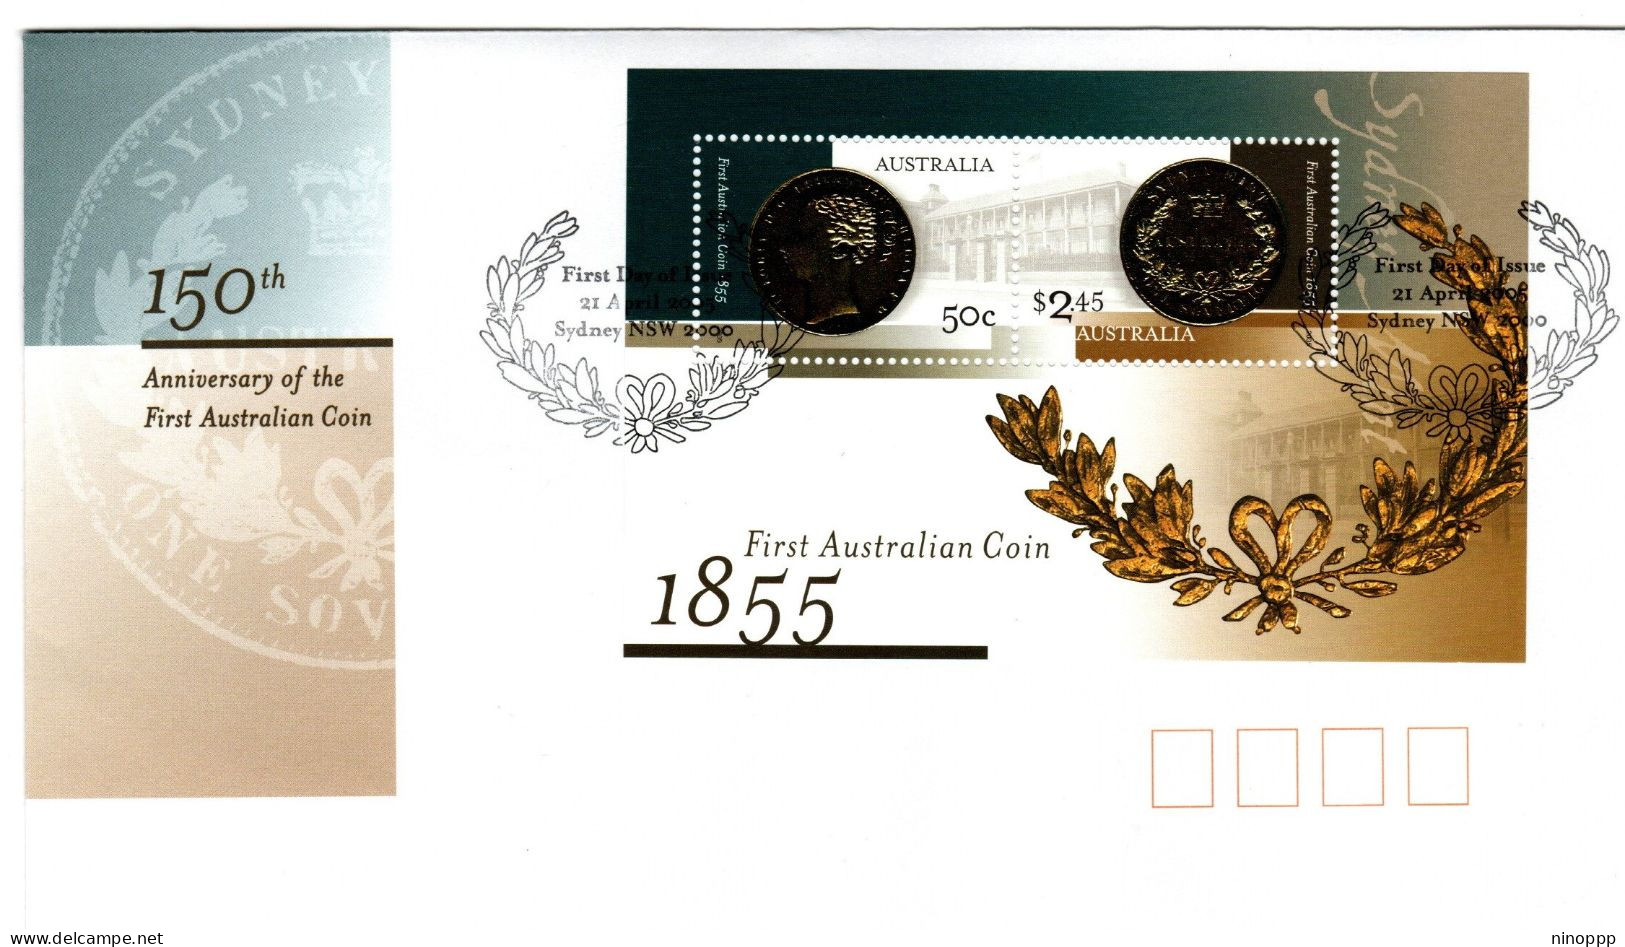 Australia 2004 150th Anniversary Of The First Australian Coin, MS,Sydney Postmark, FDI - Marcofilia